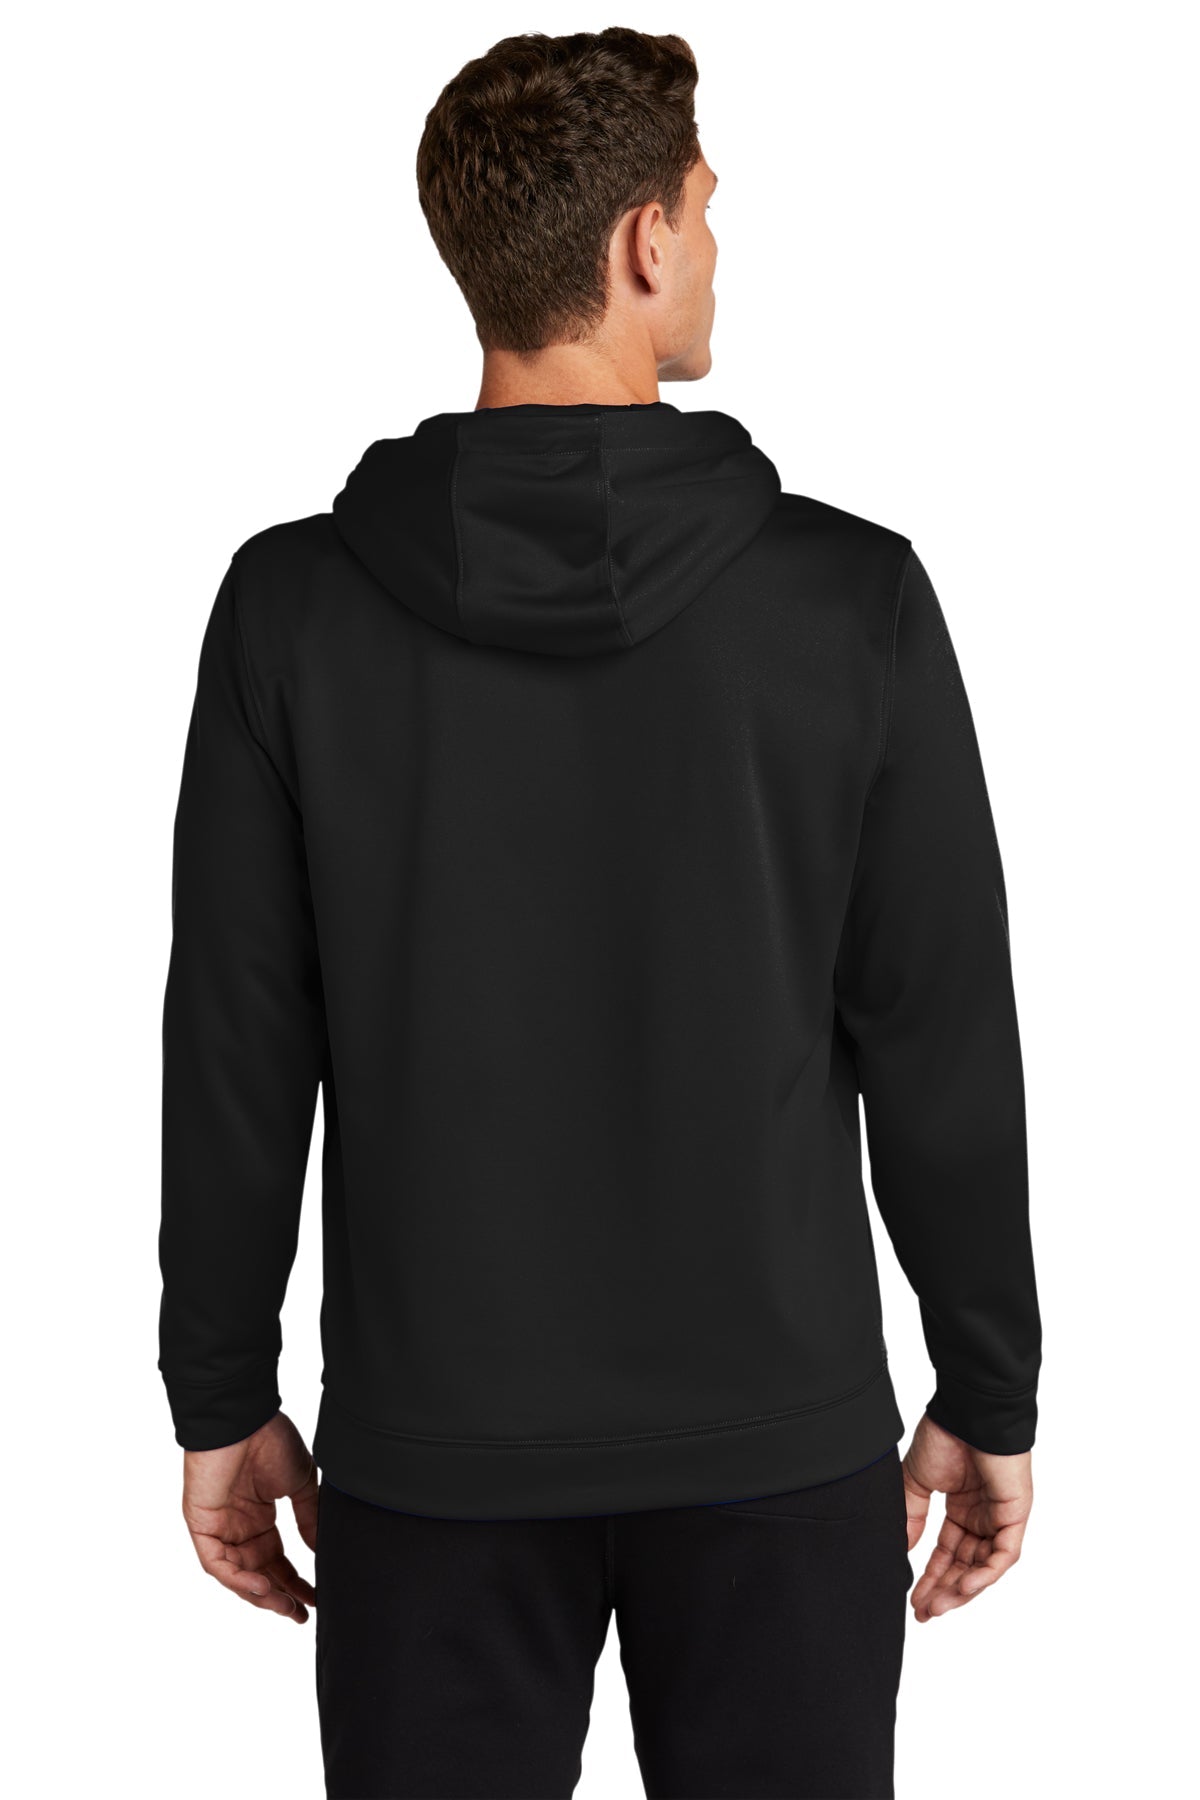 sport-tek_f244 _black_company_logo_sweatshirts